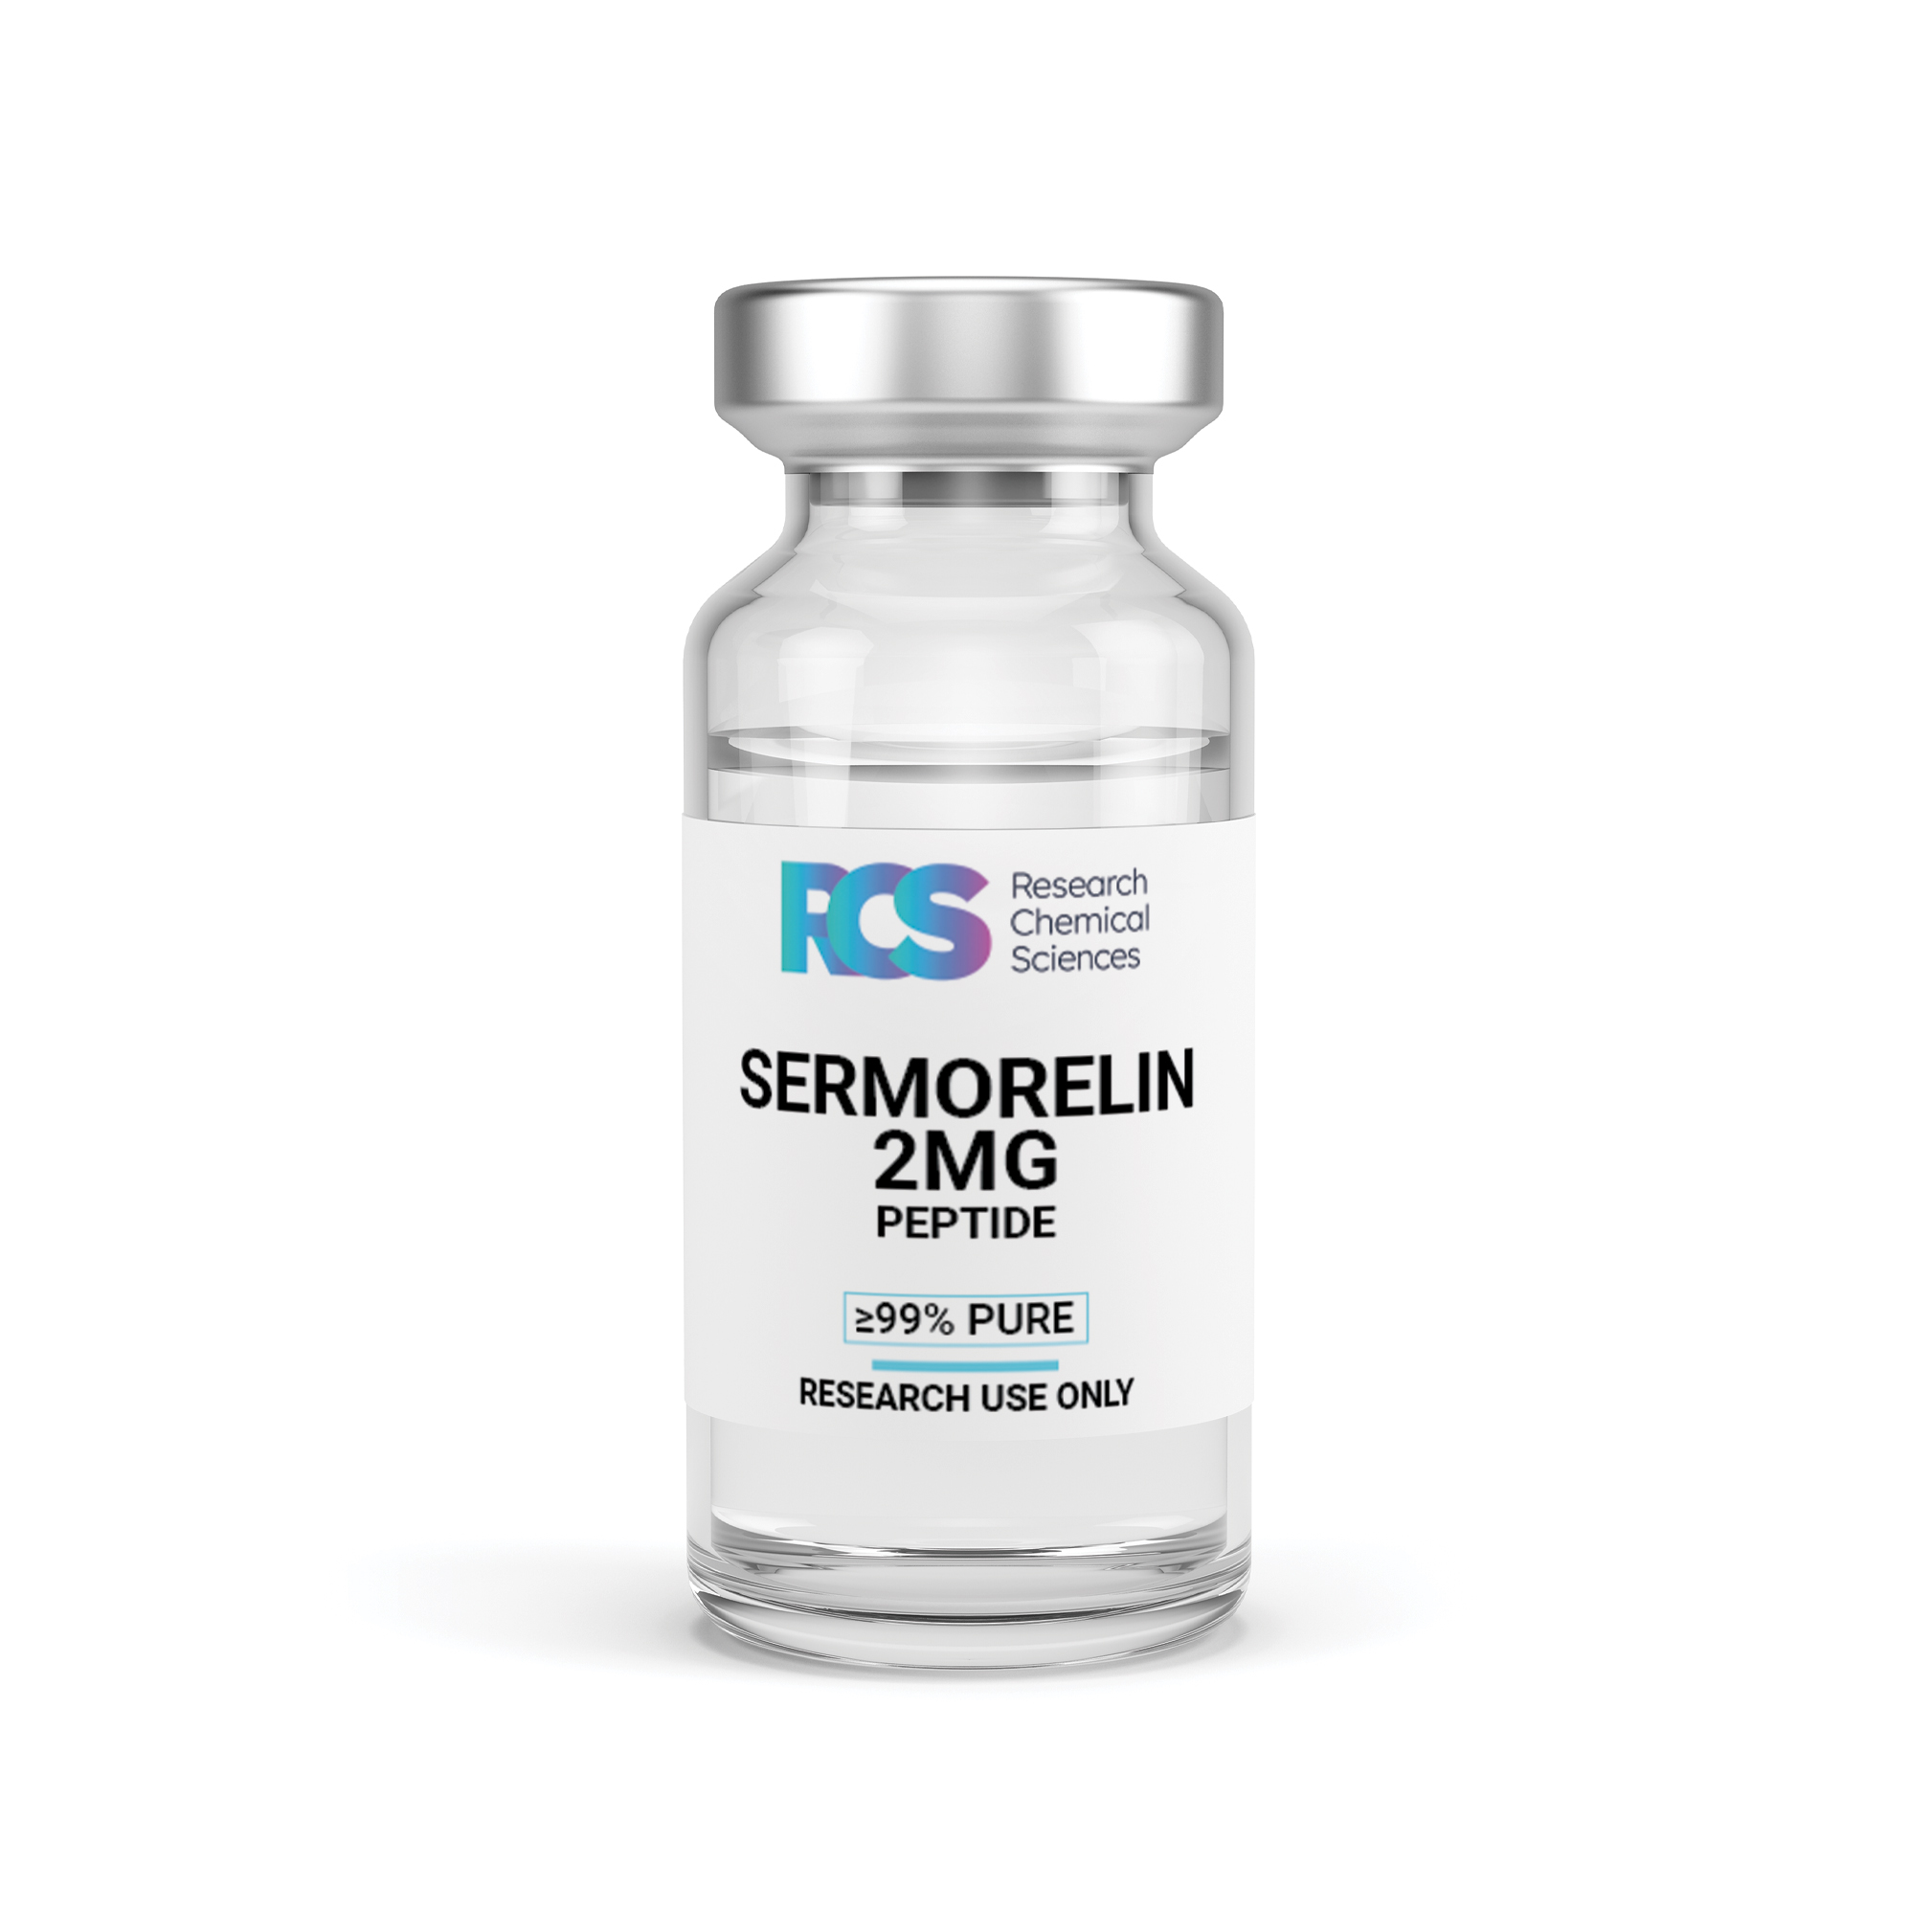 RCS-Sermorelin-Peptide-2MG-Side-1